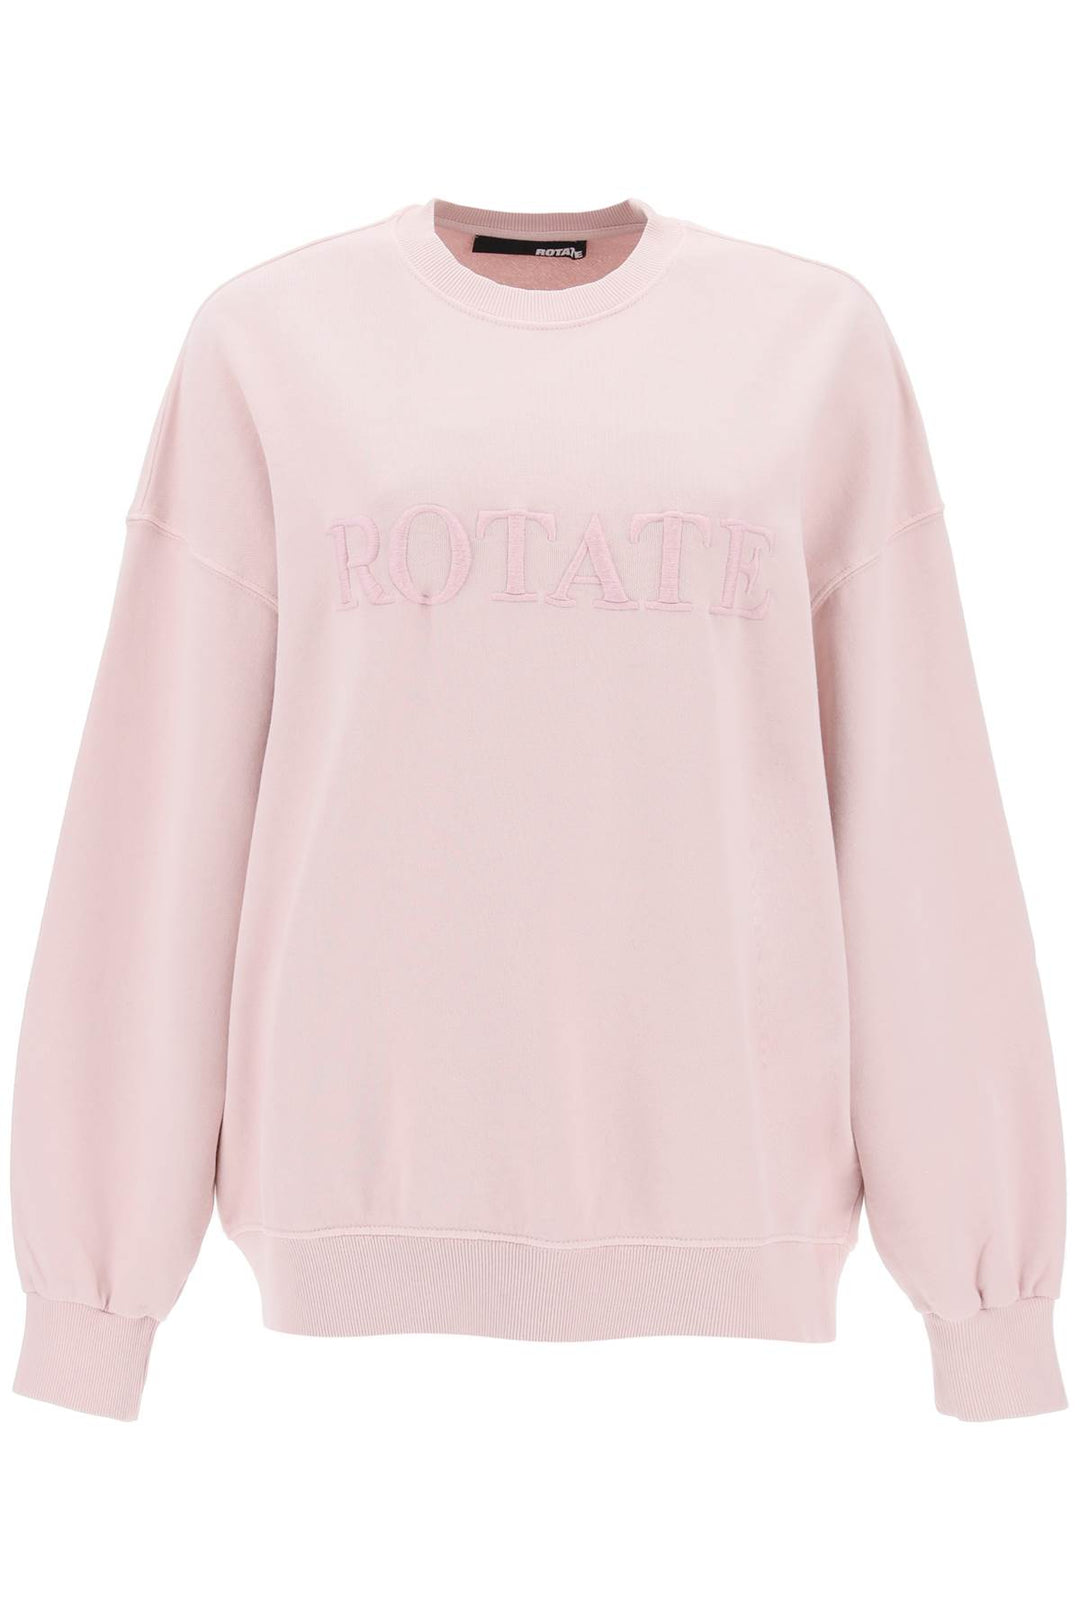 Rotate Organic Cotton Crewneck Sweatshirt   Pink